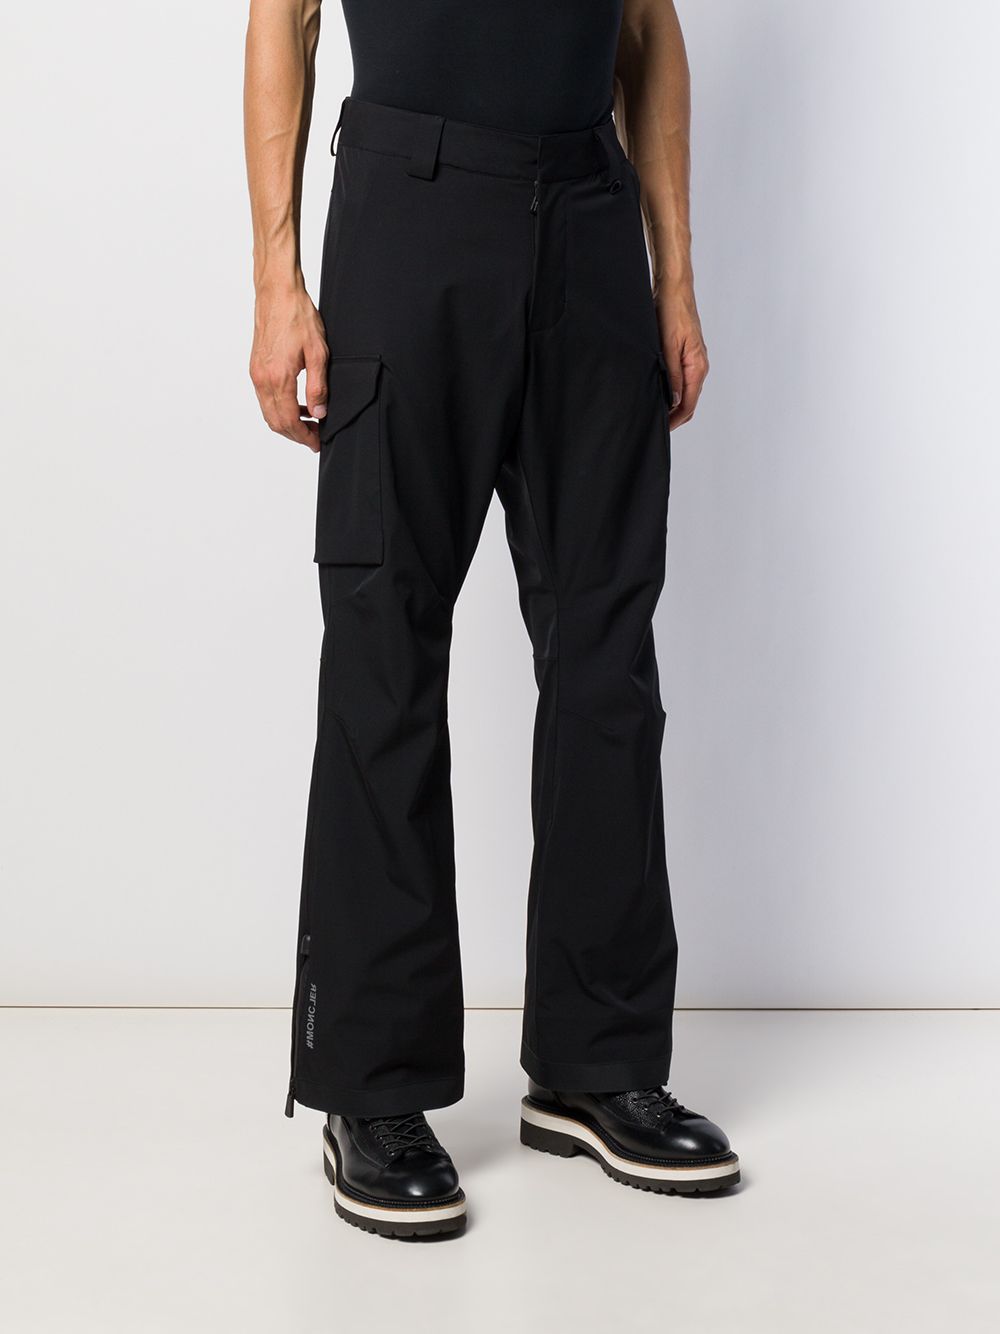 фото Moncler Grenoble брюки с эластичными манжетами